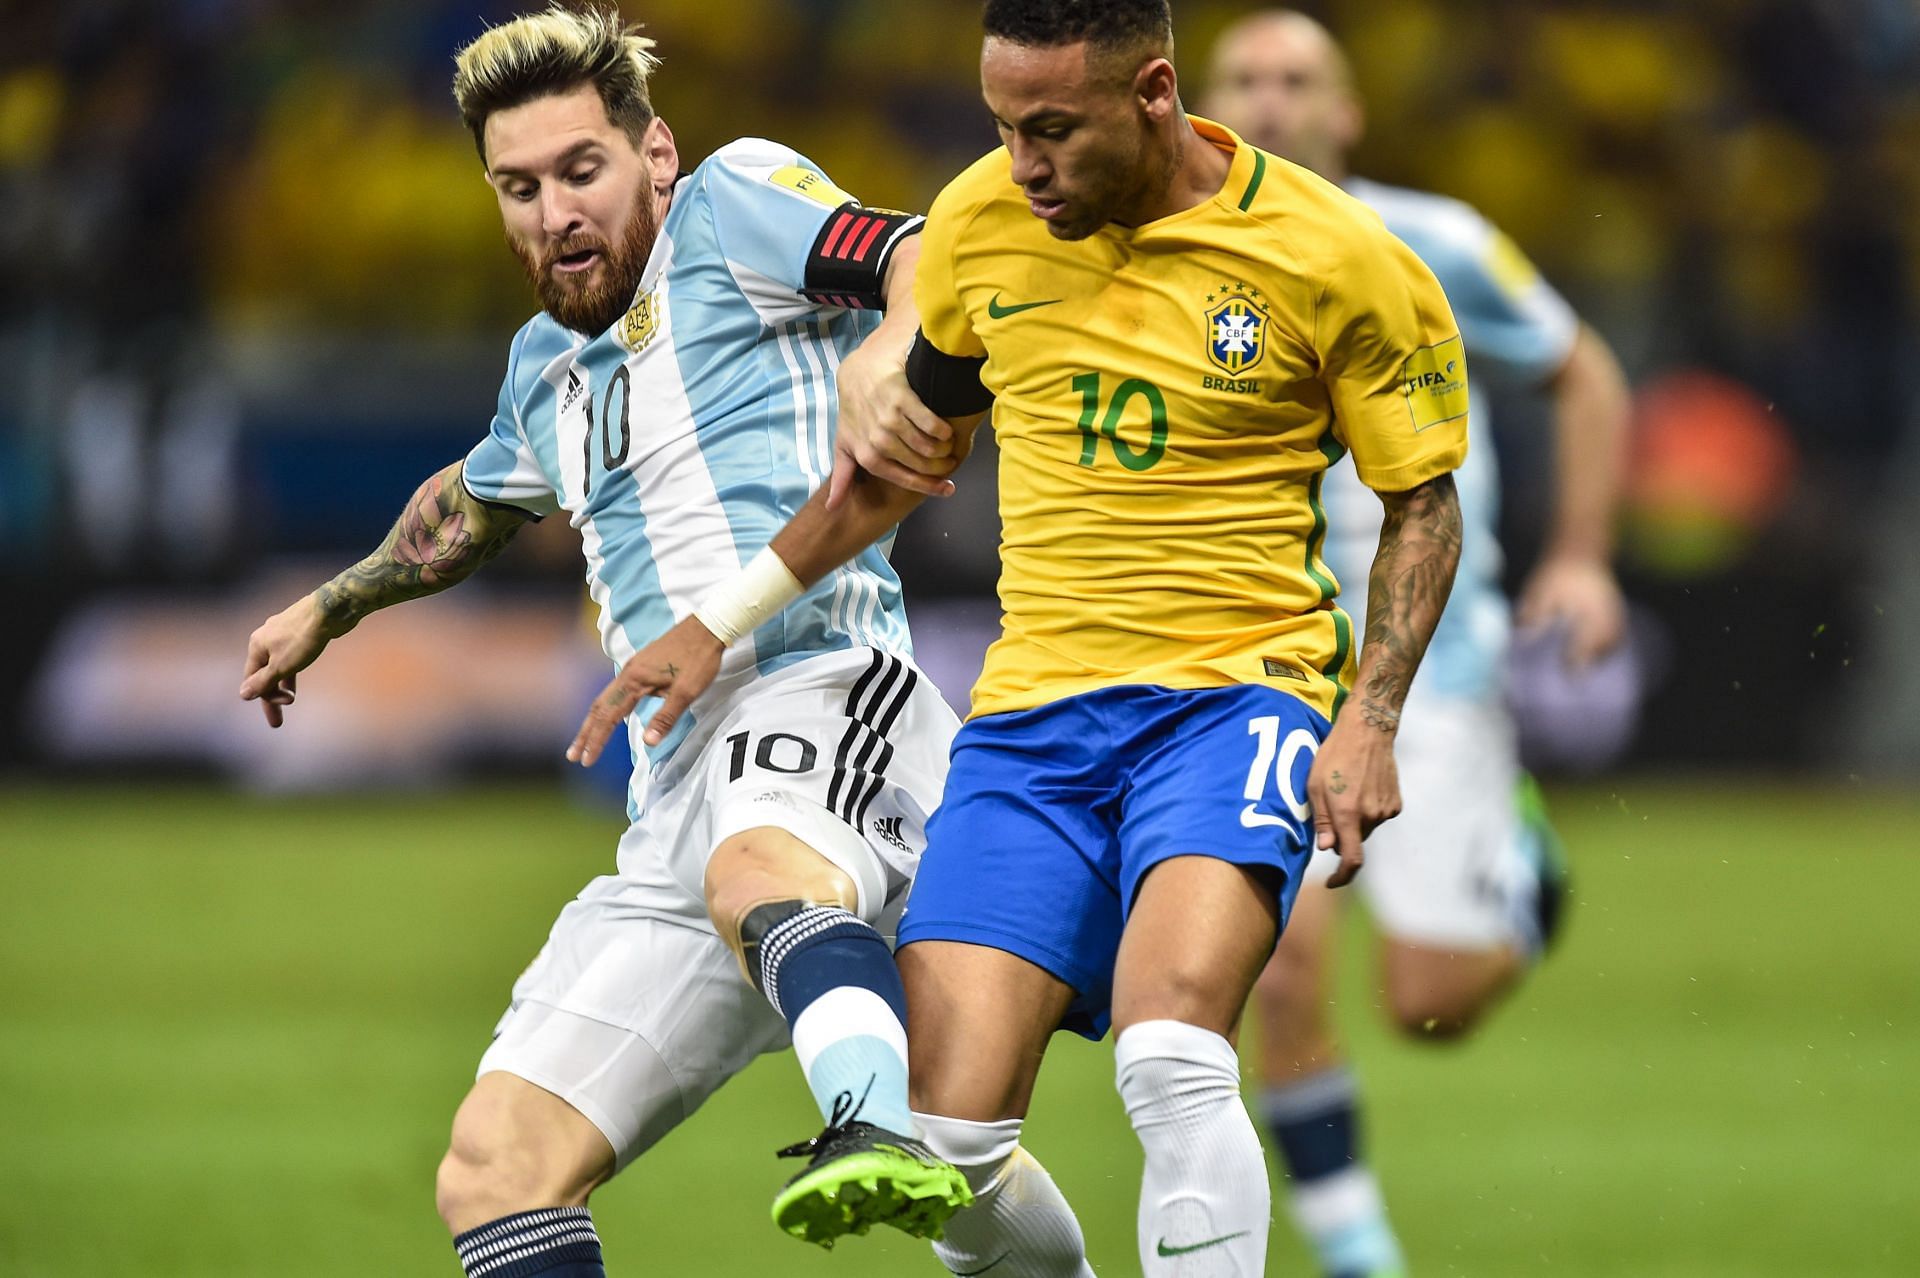 Brazil National Football Team, PDF, Fifa World Cup